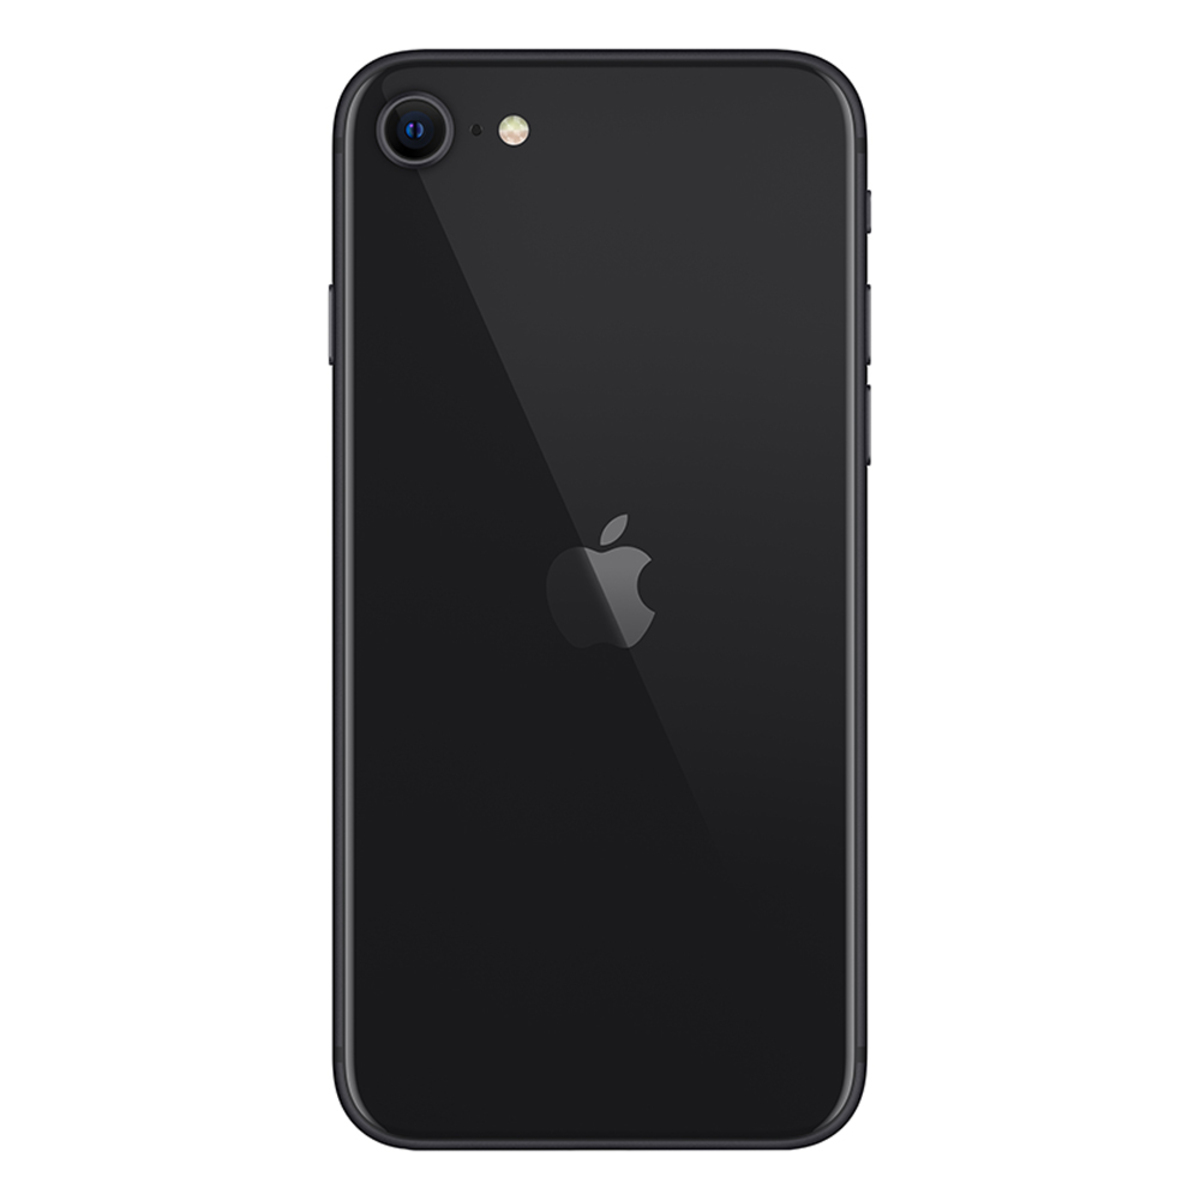 Apple iPhone SE 128GB Black